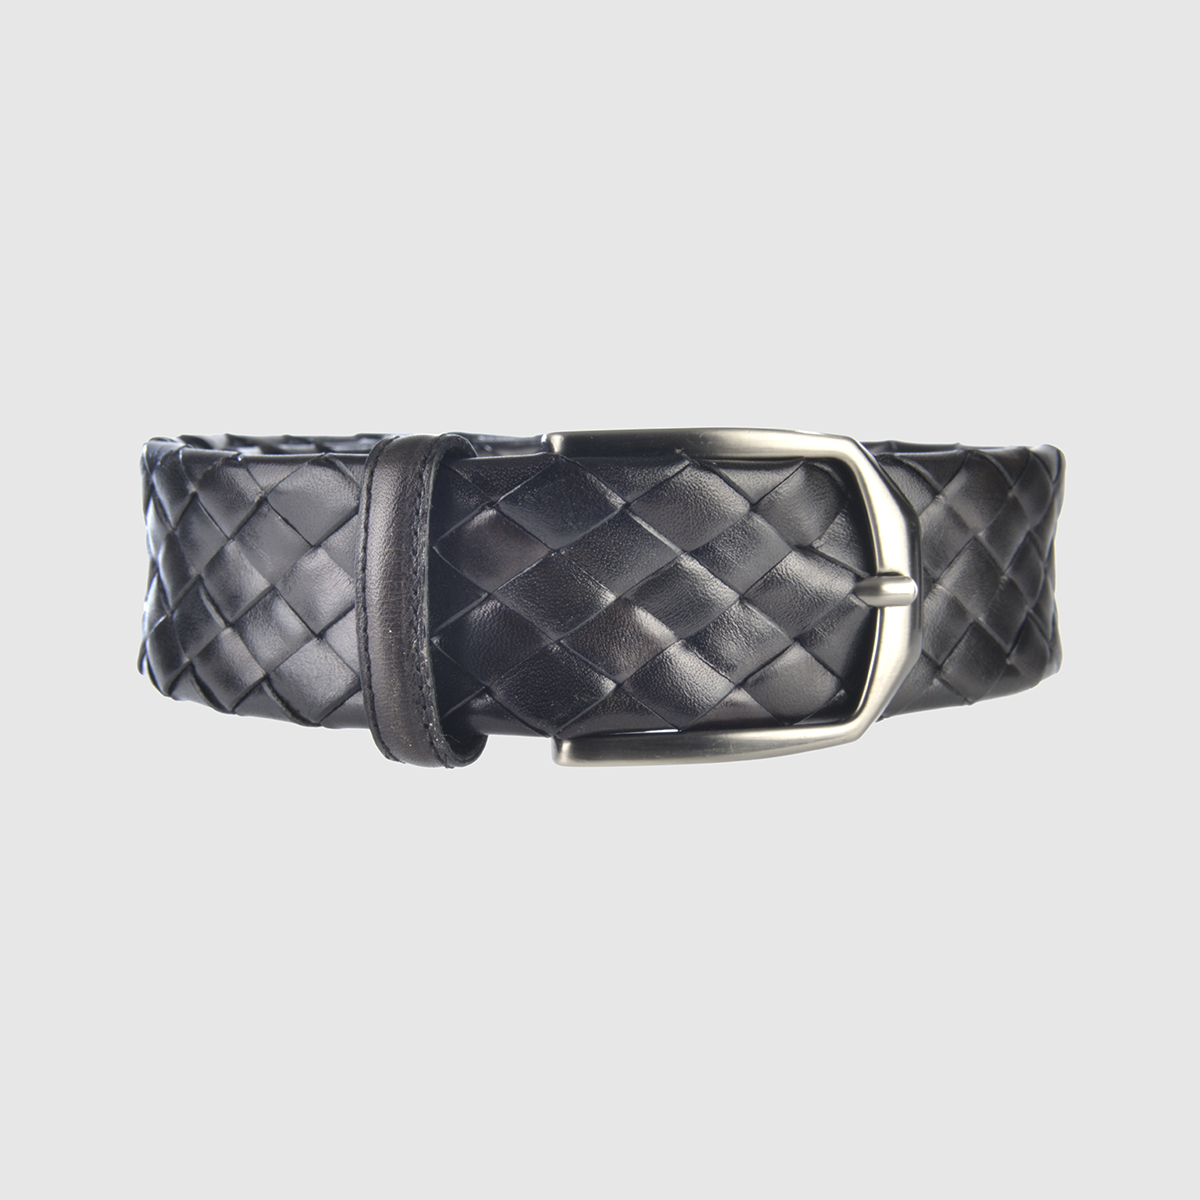 Black Braided Leather Belt Athison on sale 2022